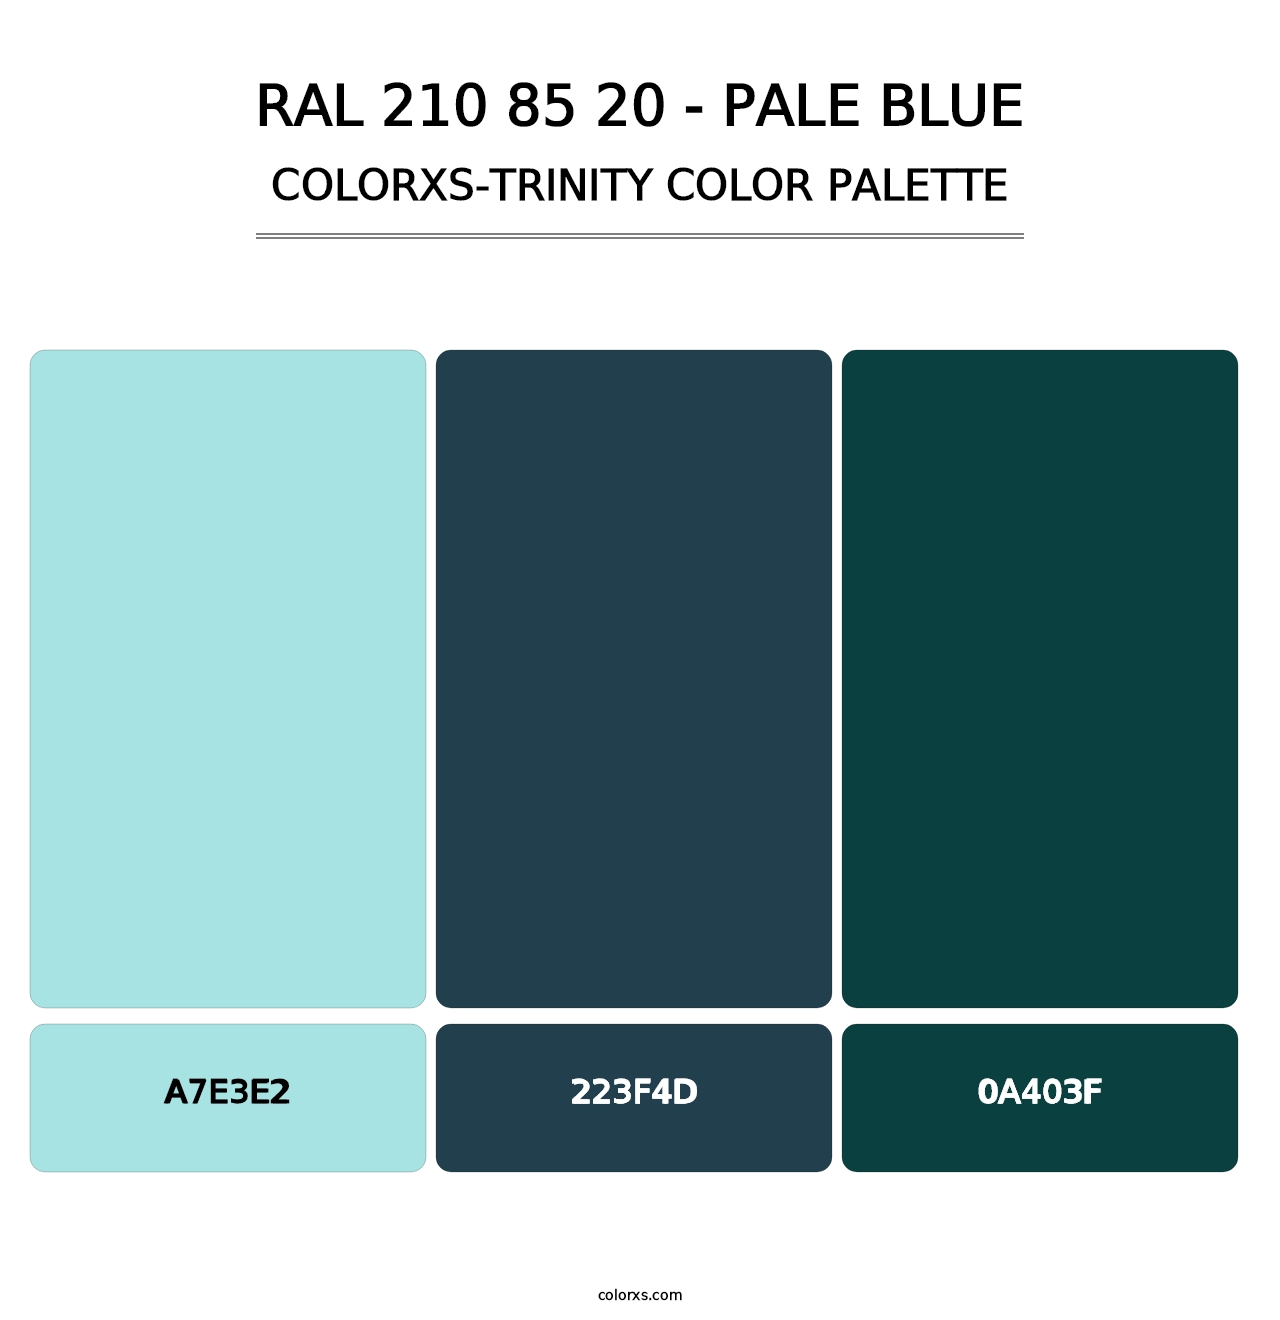 RAL 210 85 20 - Pale Blue - Colorxs Trinity Palette